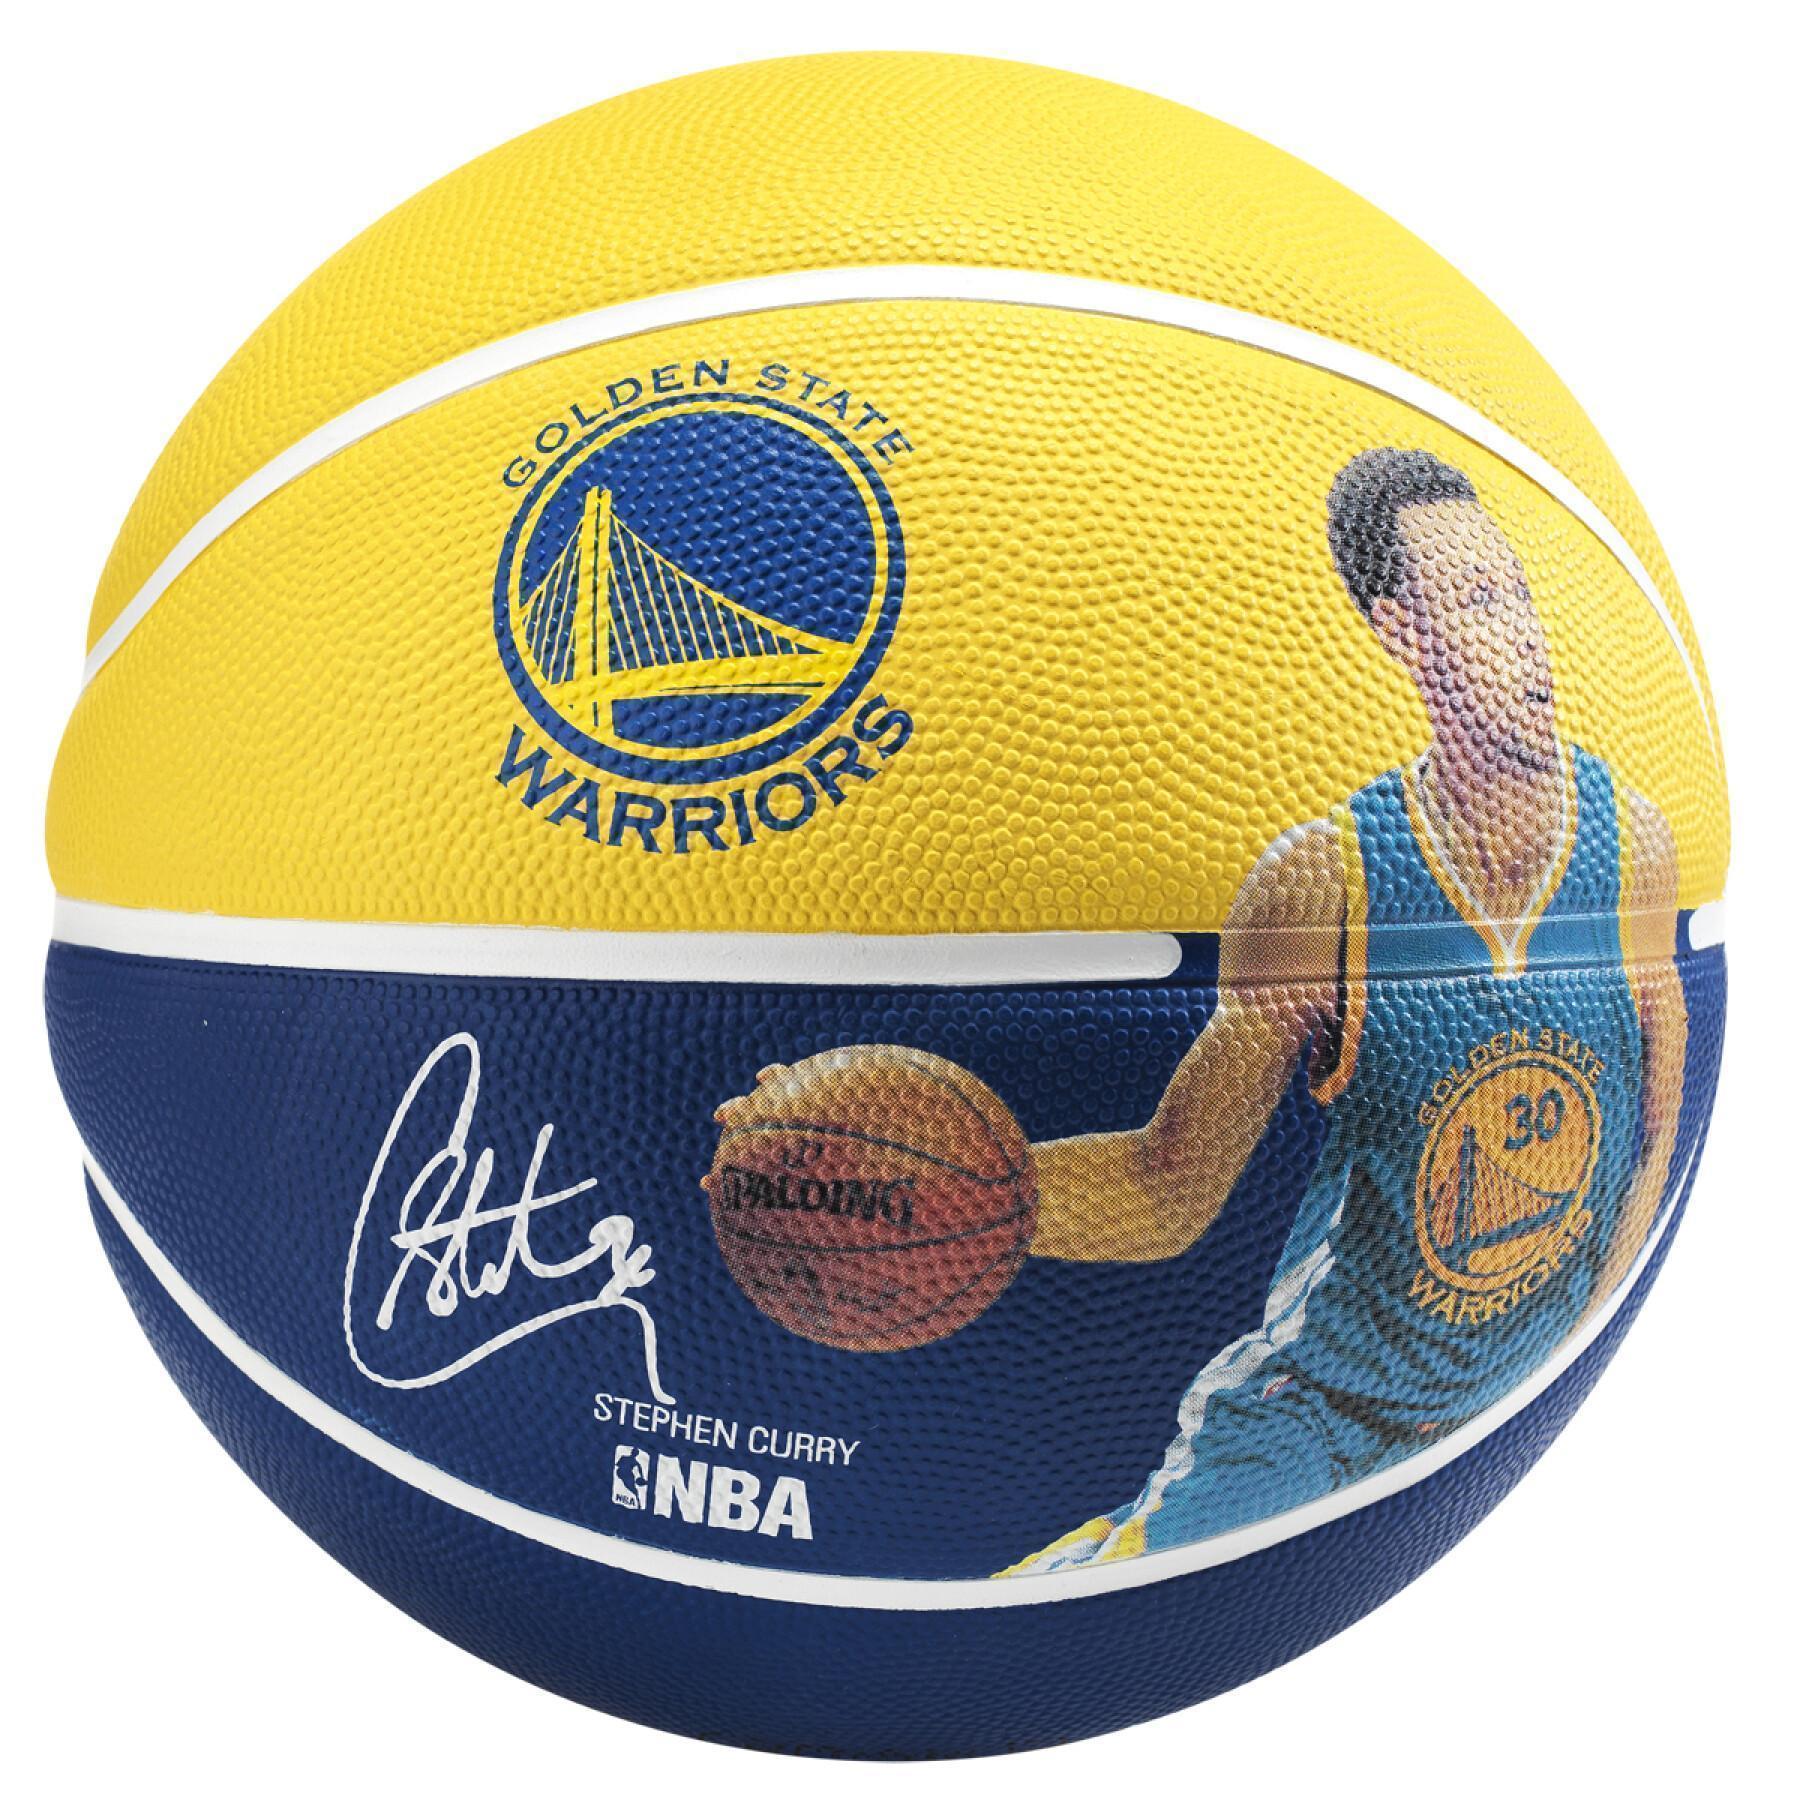 Ballong Spalding Player Stephen Curry